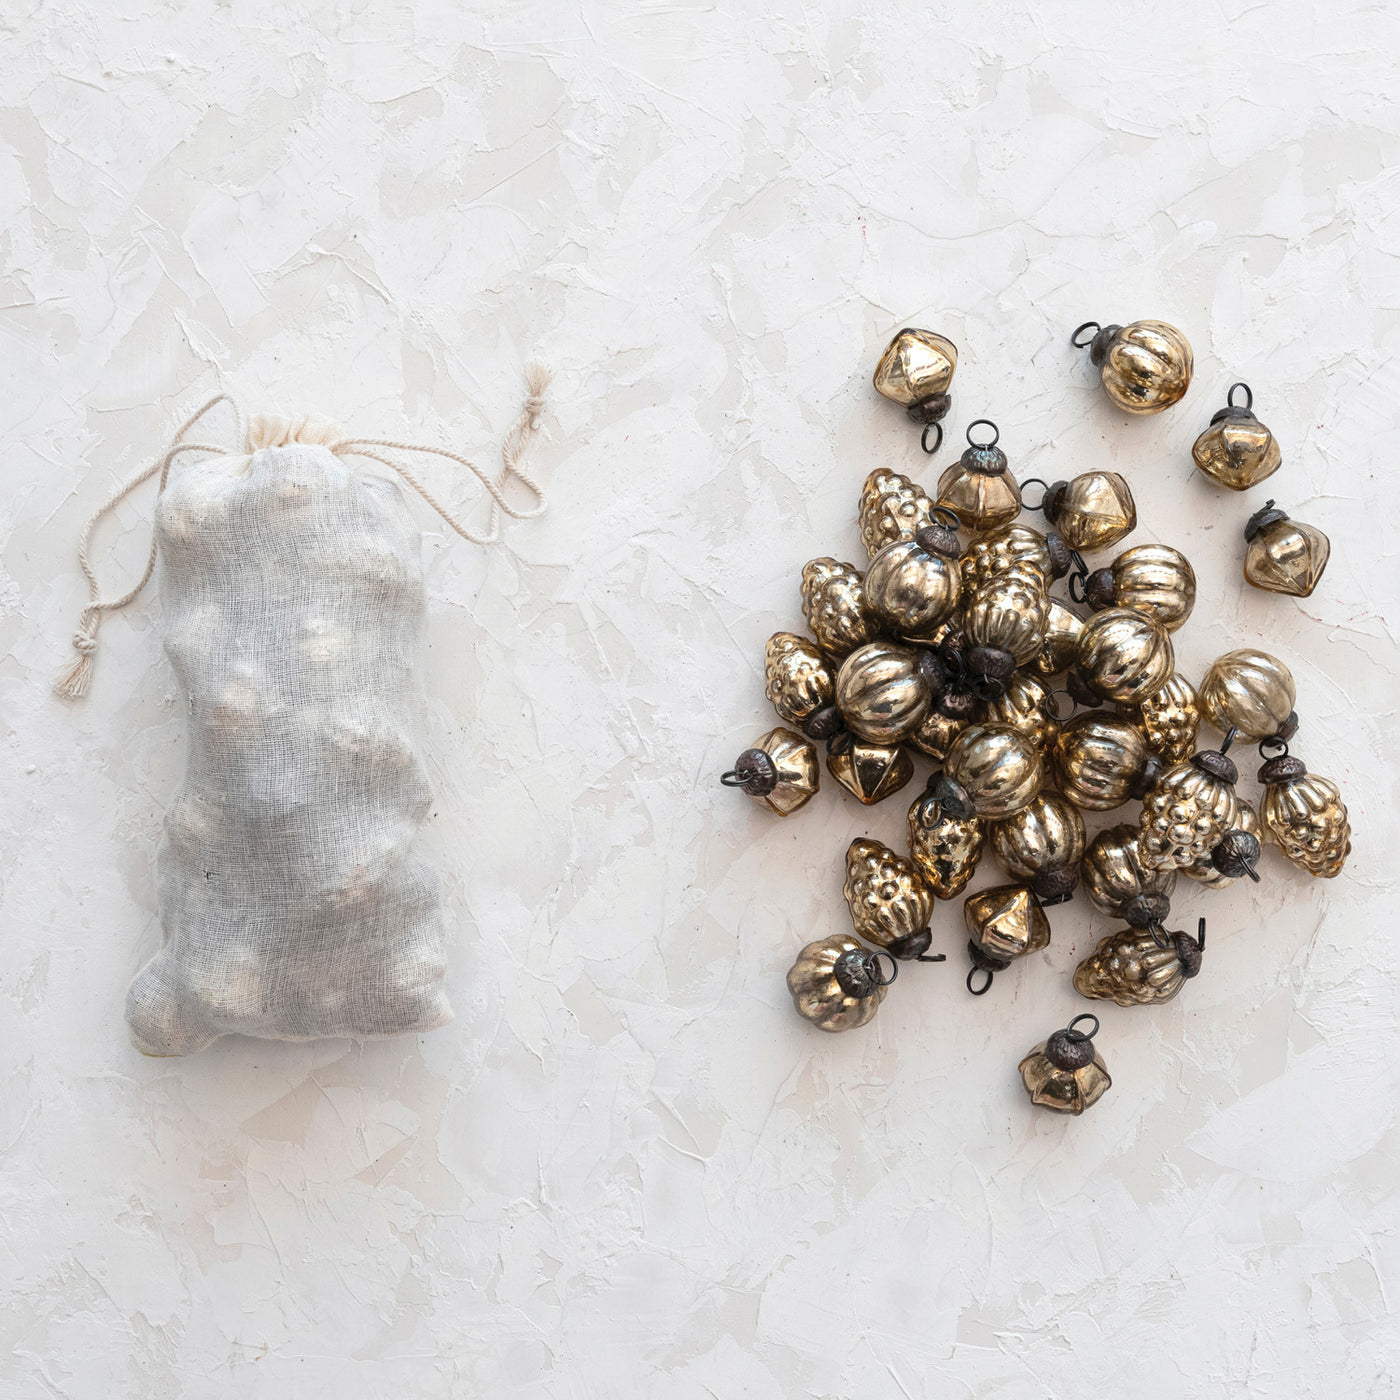 Bag of Antique Gold Mercury Glass Ornaments